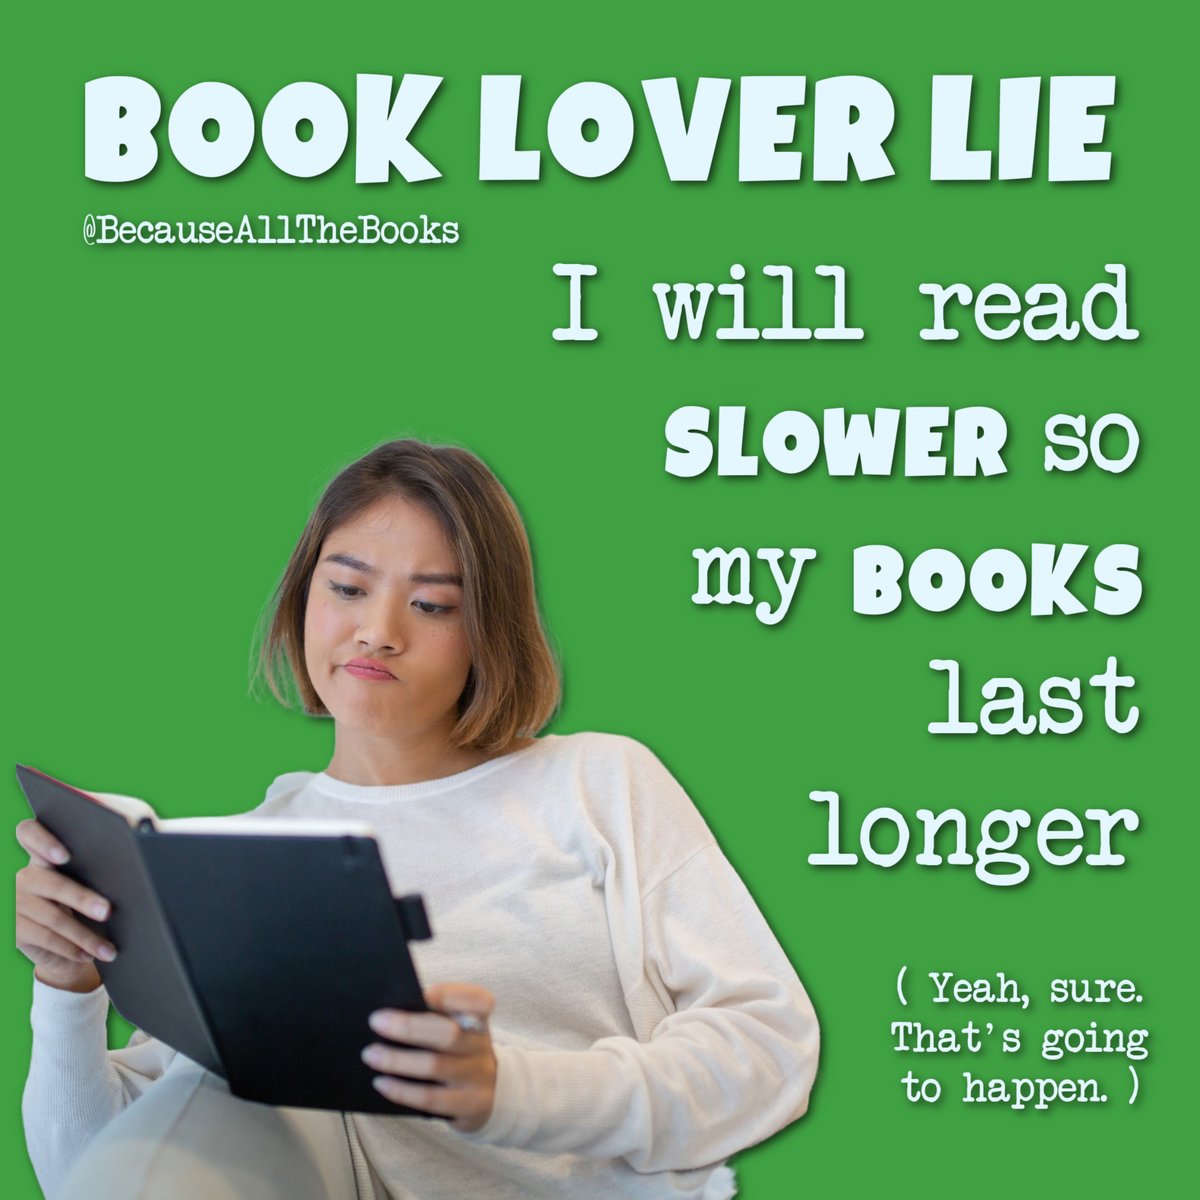 Right, sure. We'll read slower. Uh huh.

#BecauseAllTheBooks #AddictedToBooks #AddictedToReading #BookAddict #BookAddicted